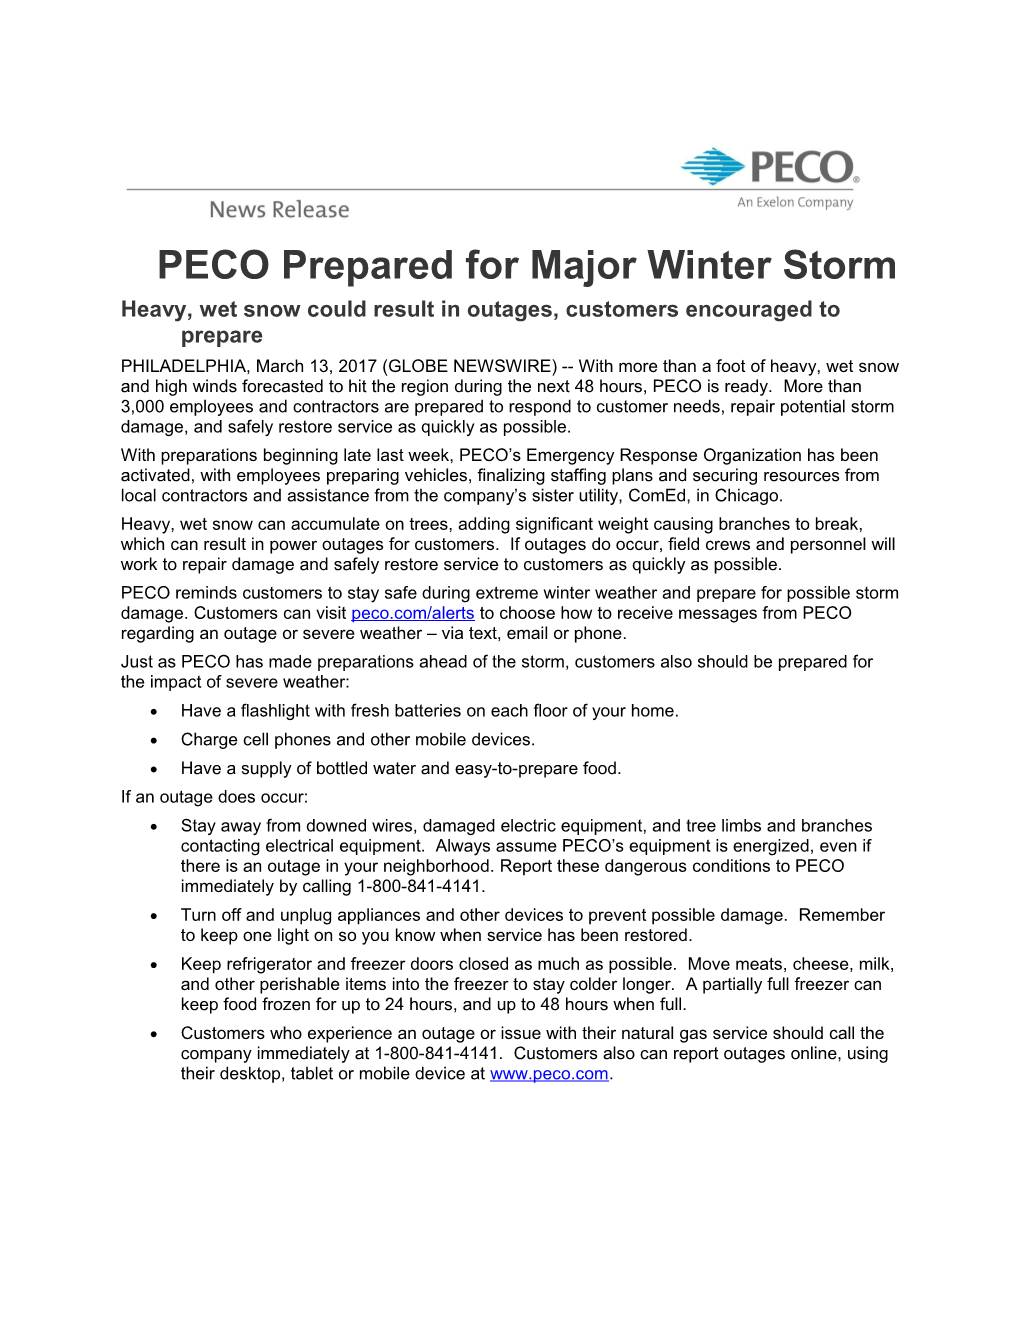 PECO Prepared for Major Winter Storm